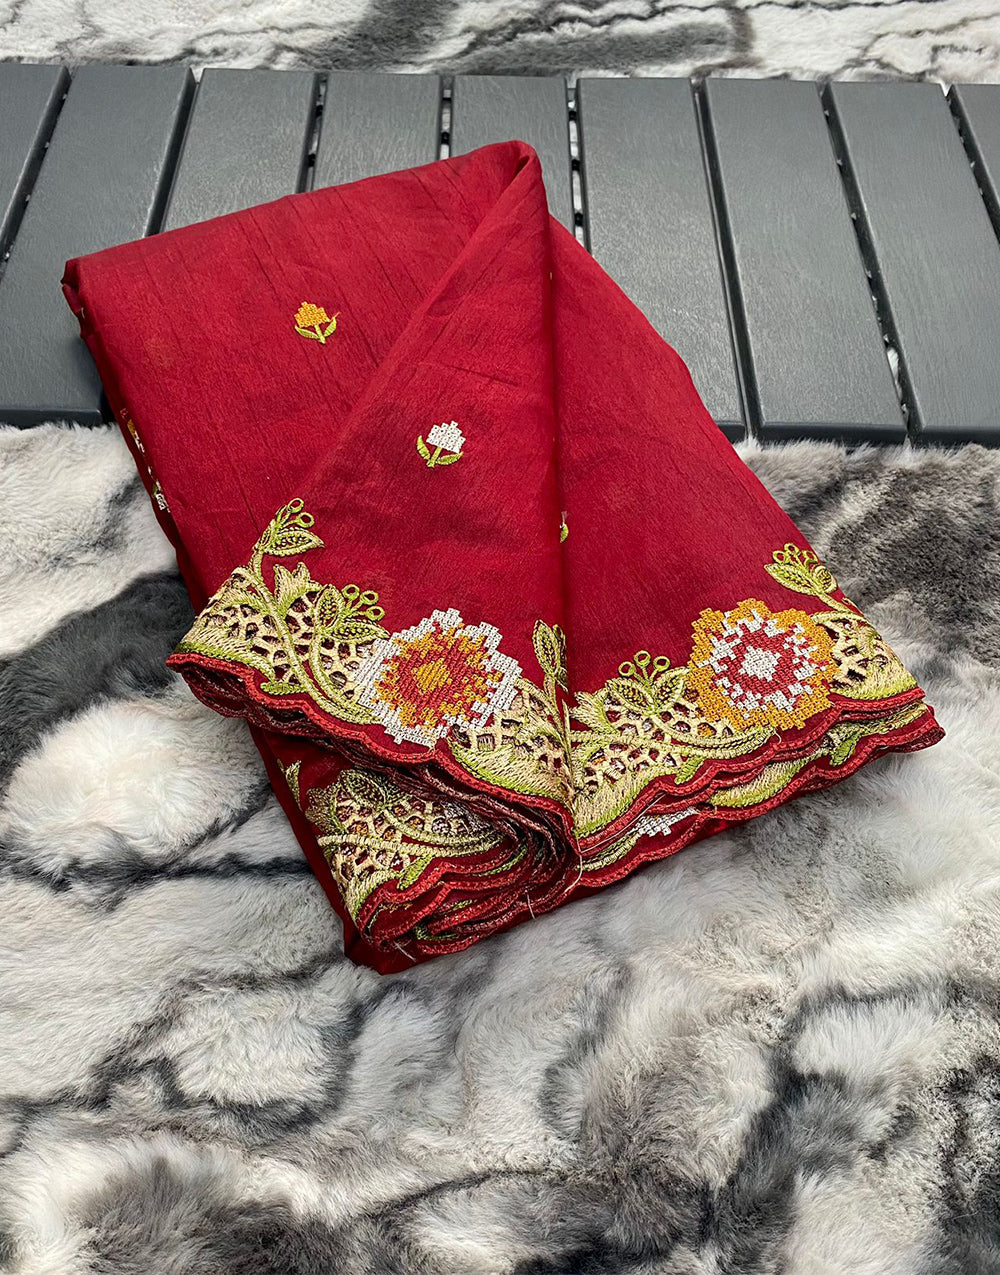 Carmine Red Tussar Silk Saree With Embroidery & Cutwork Border